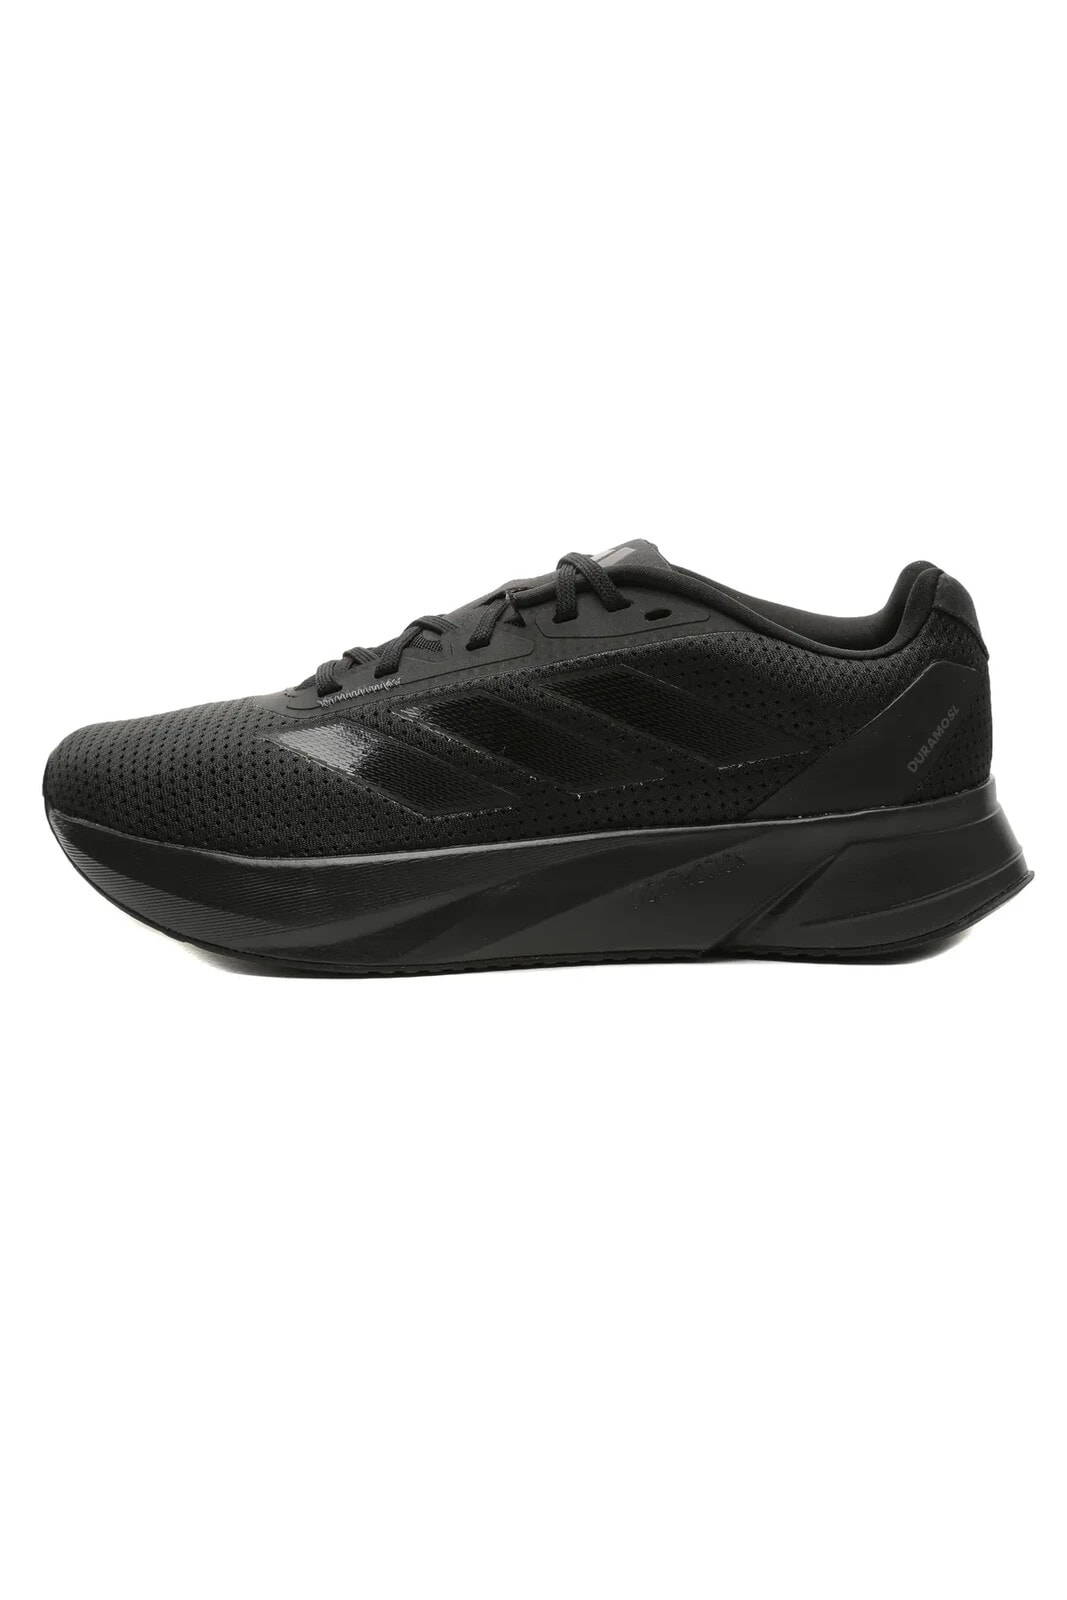 IE7261-E adidas Duramo Sl M Erkek Spor Ayakkabı Siyah